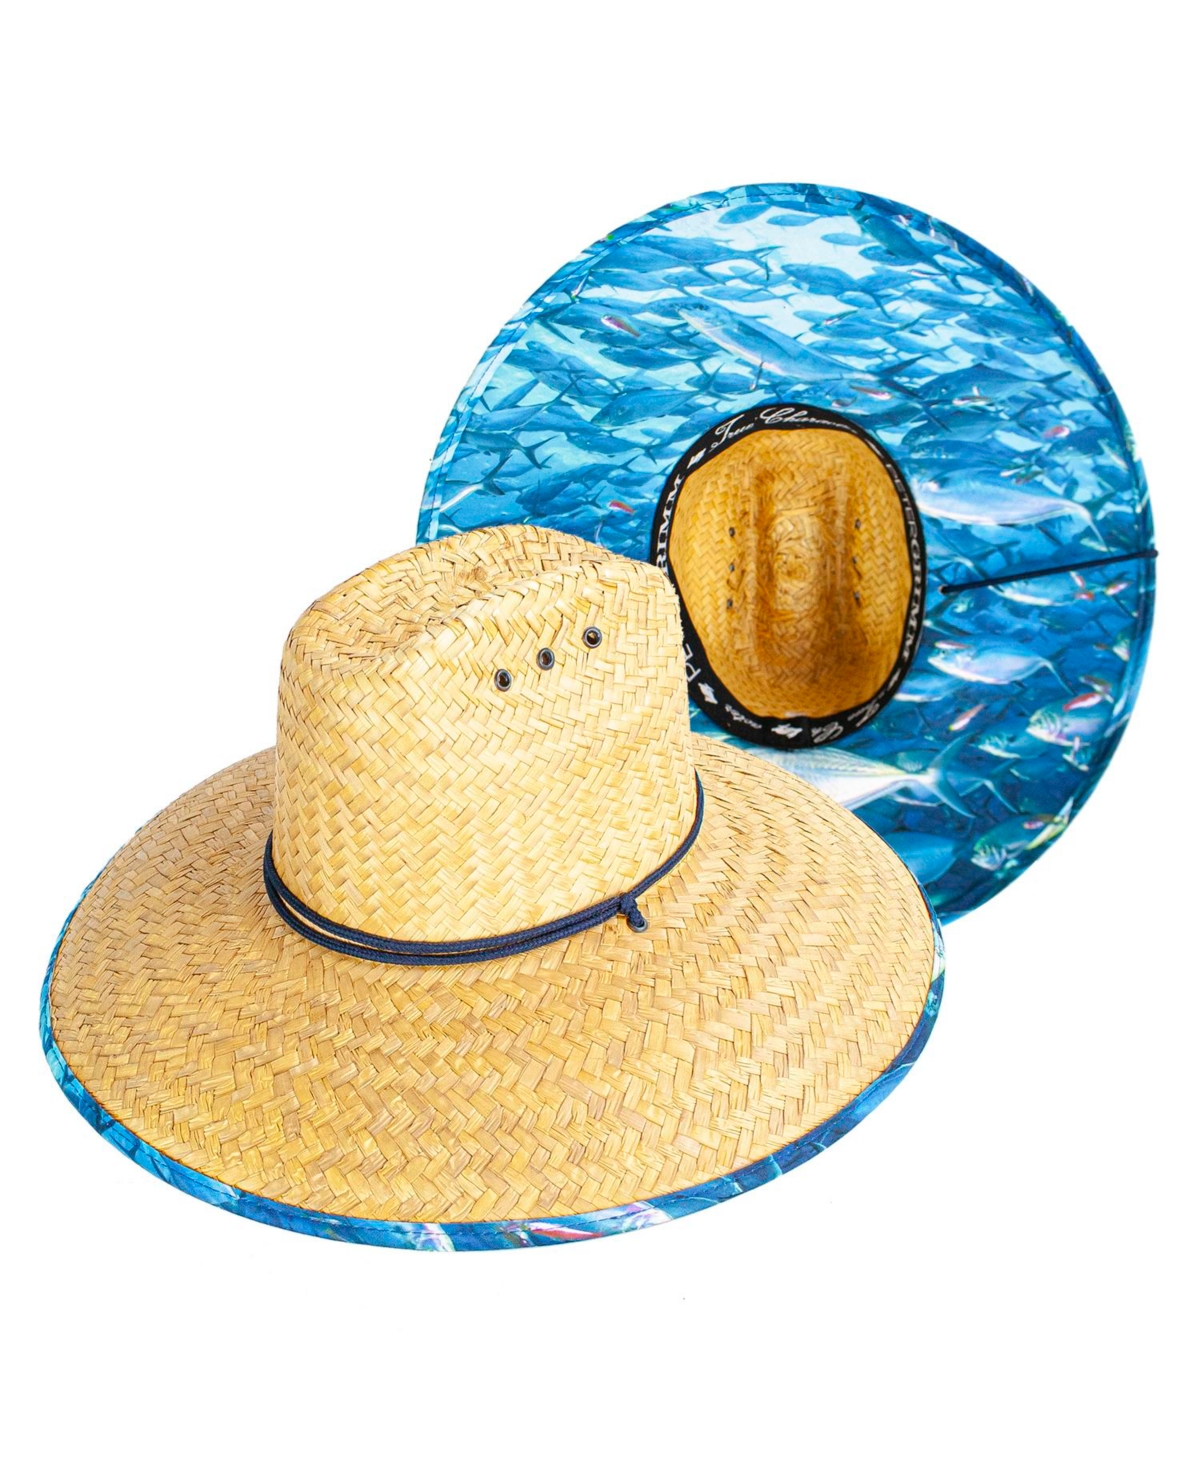 Candumbre Straw Lifeguard Hat - Natural